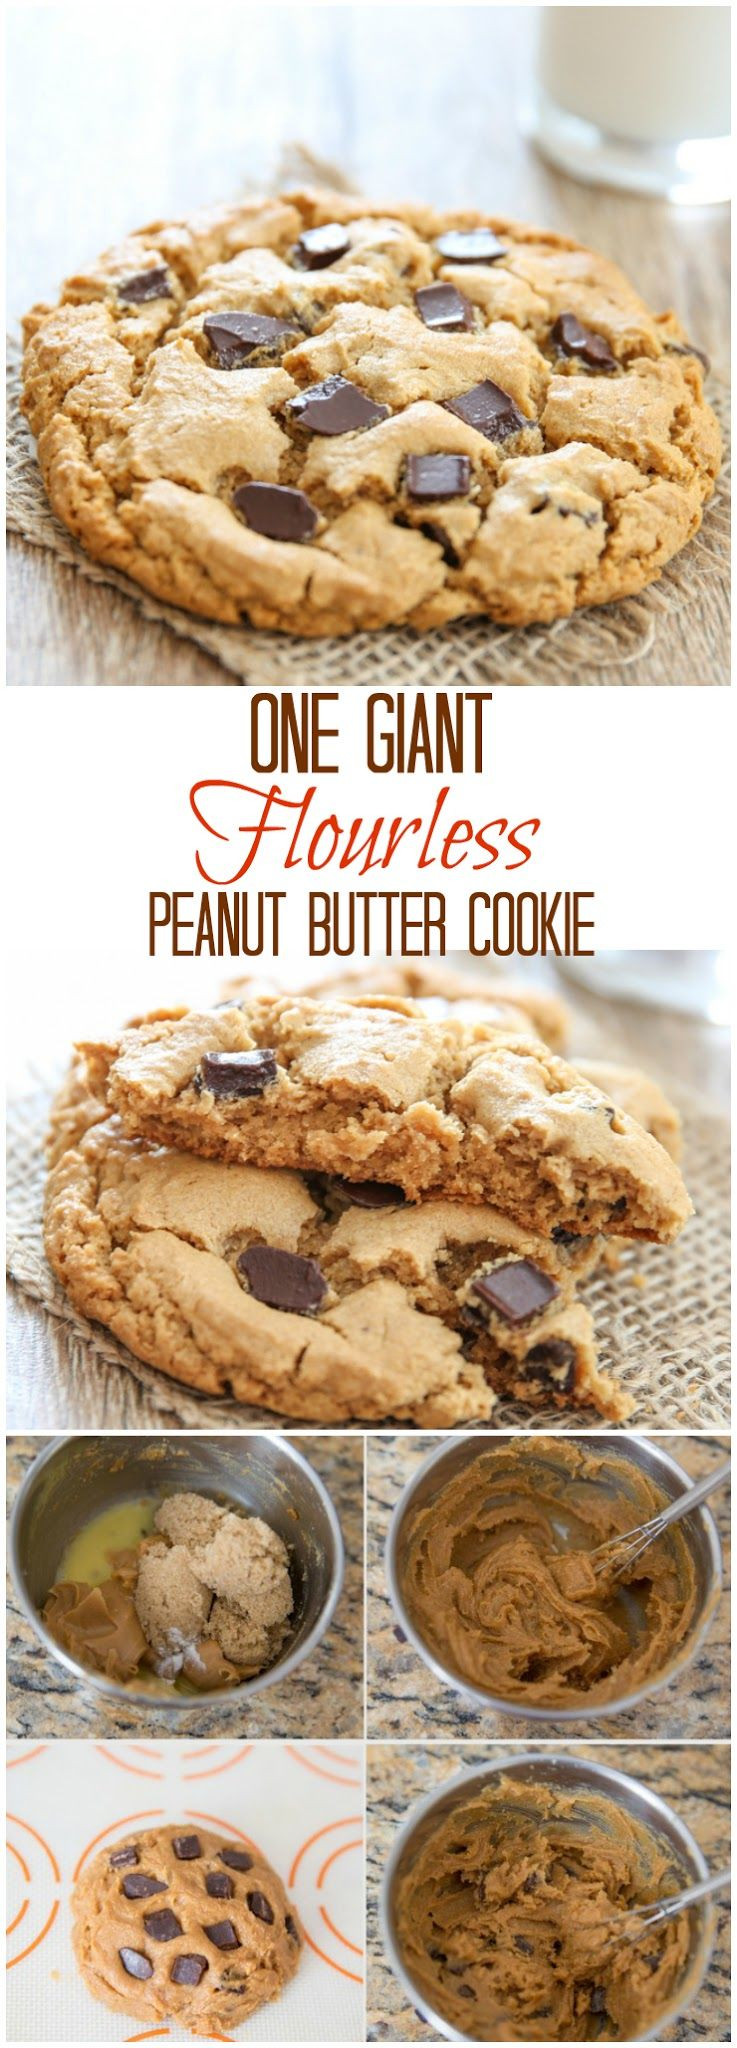 Gourmet Peanut Butter Cookies
 Single Serving Giant Flourless Peanut Butter Cookie